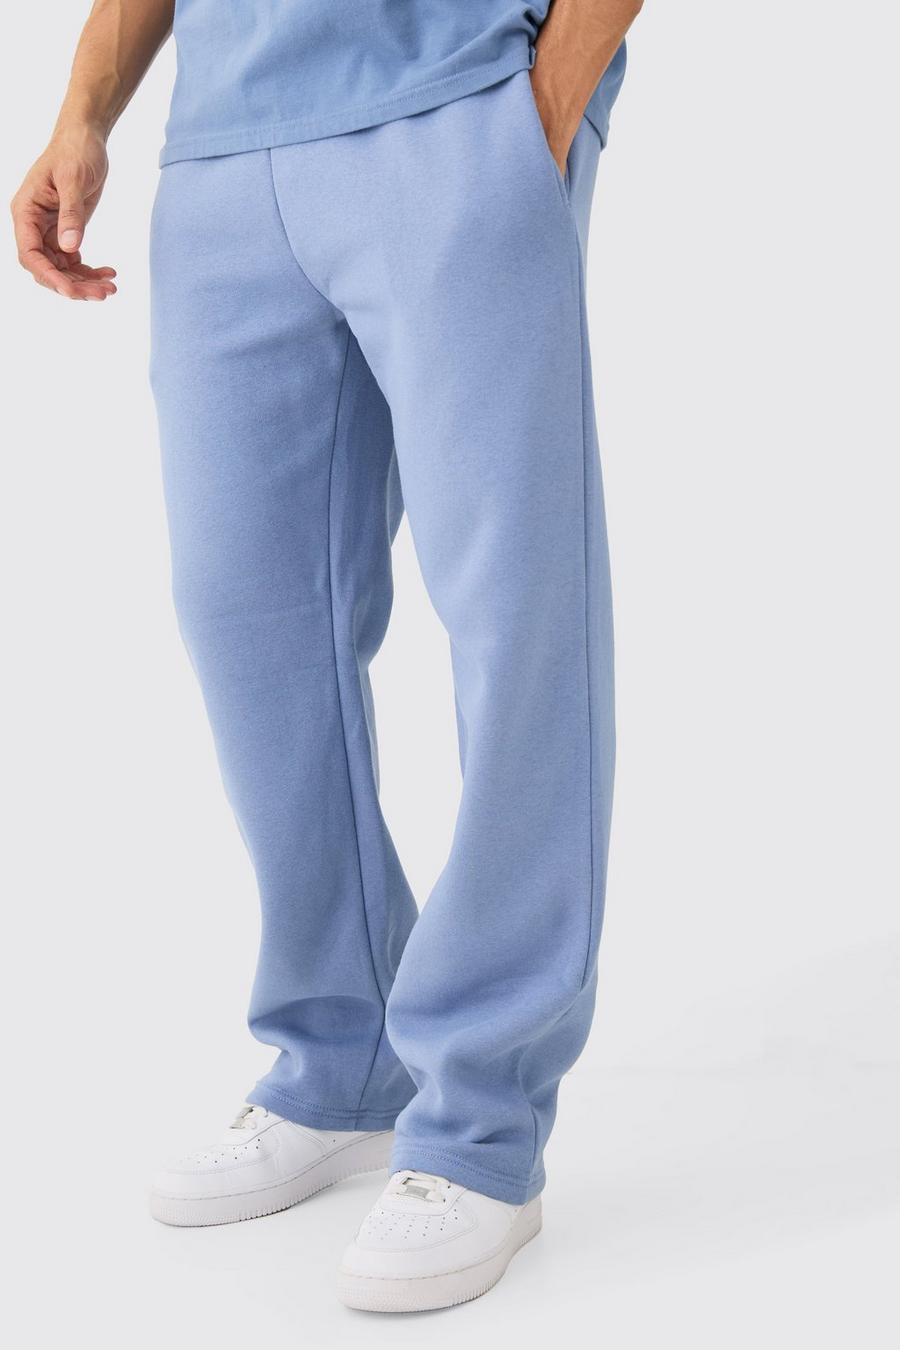 Pantalón deportivo holgado, Dusty blue